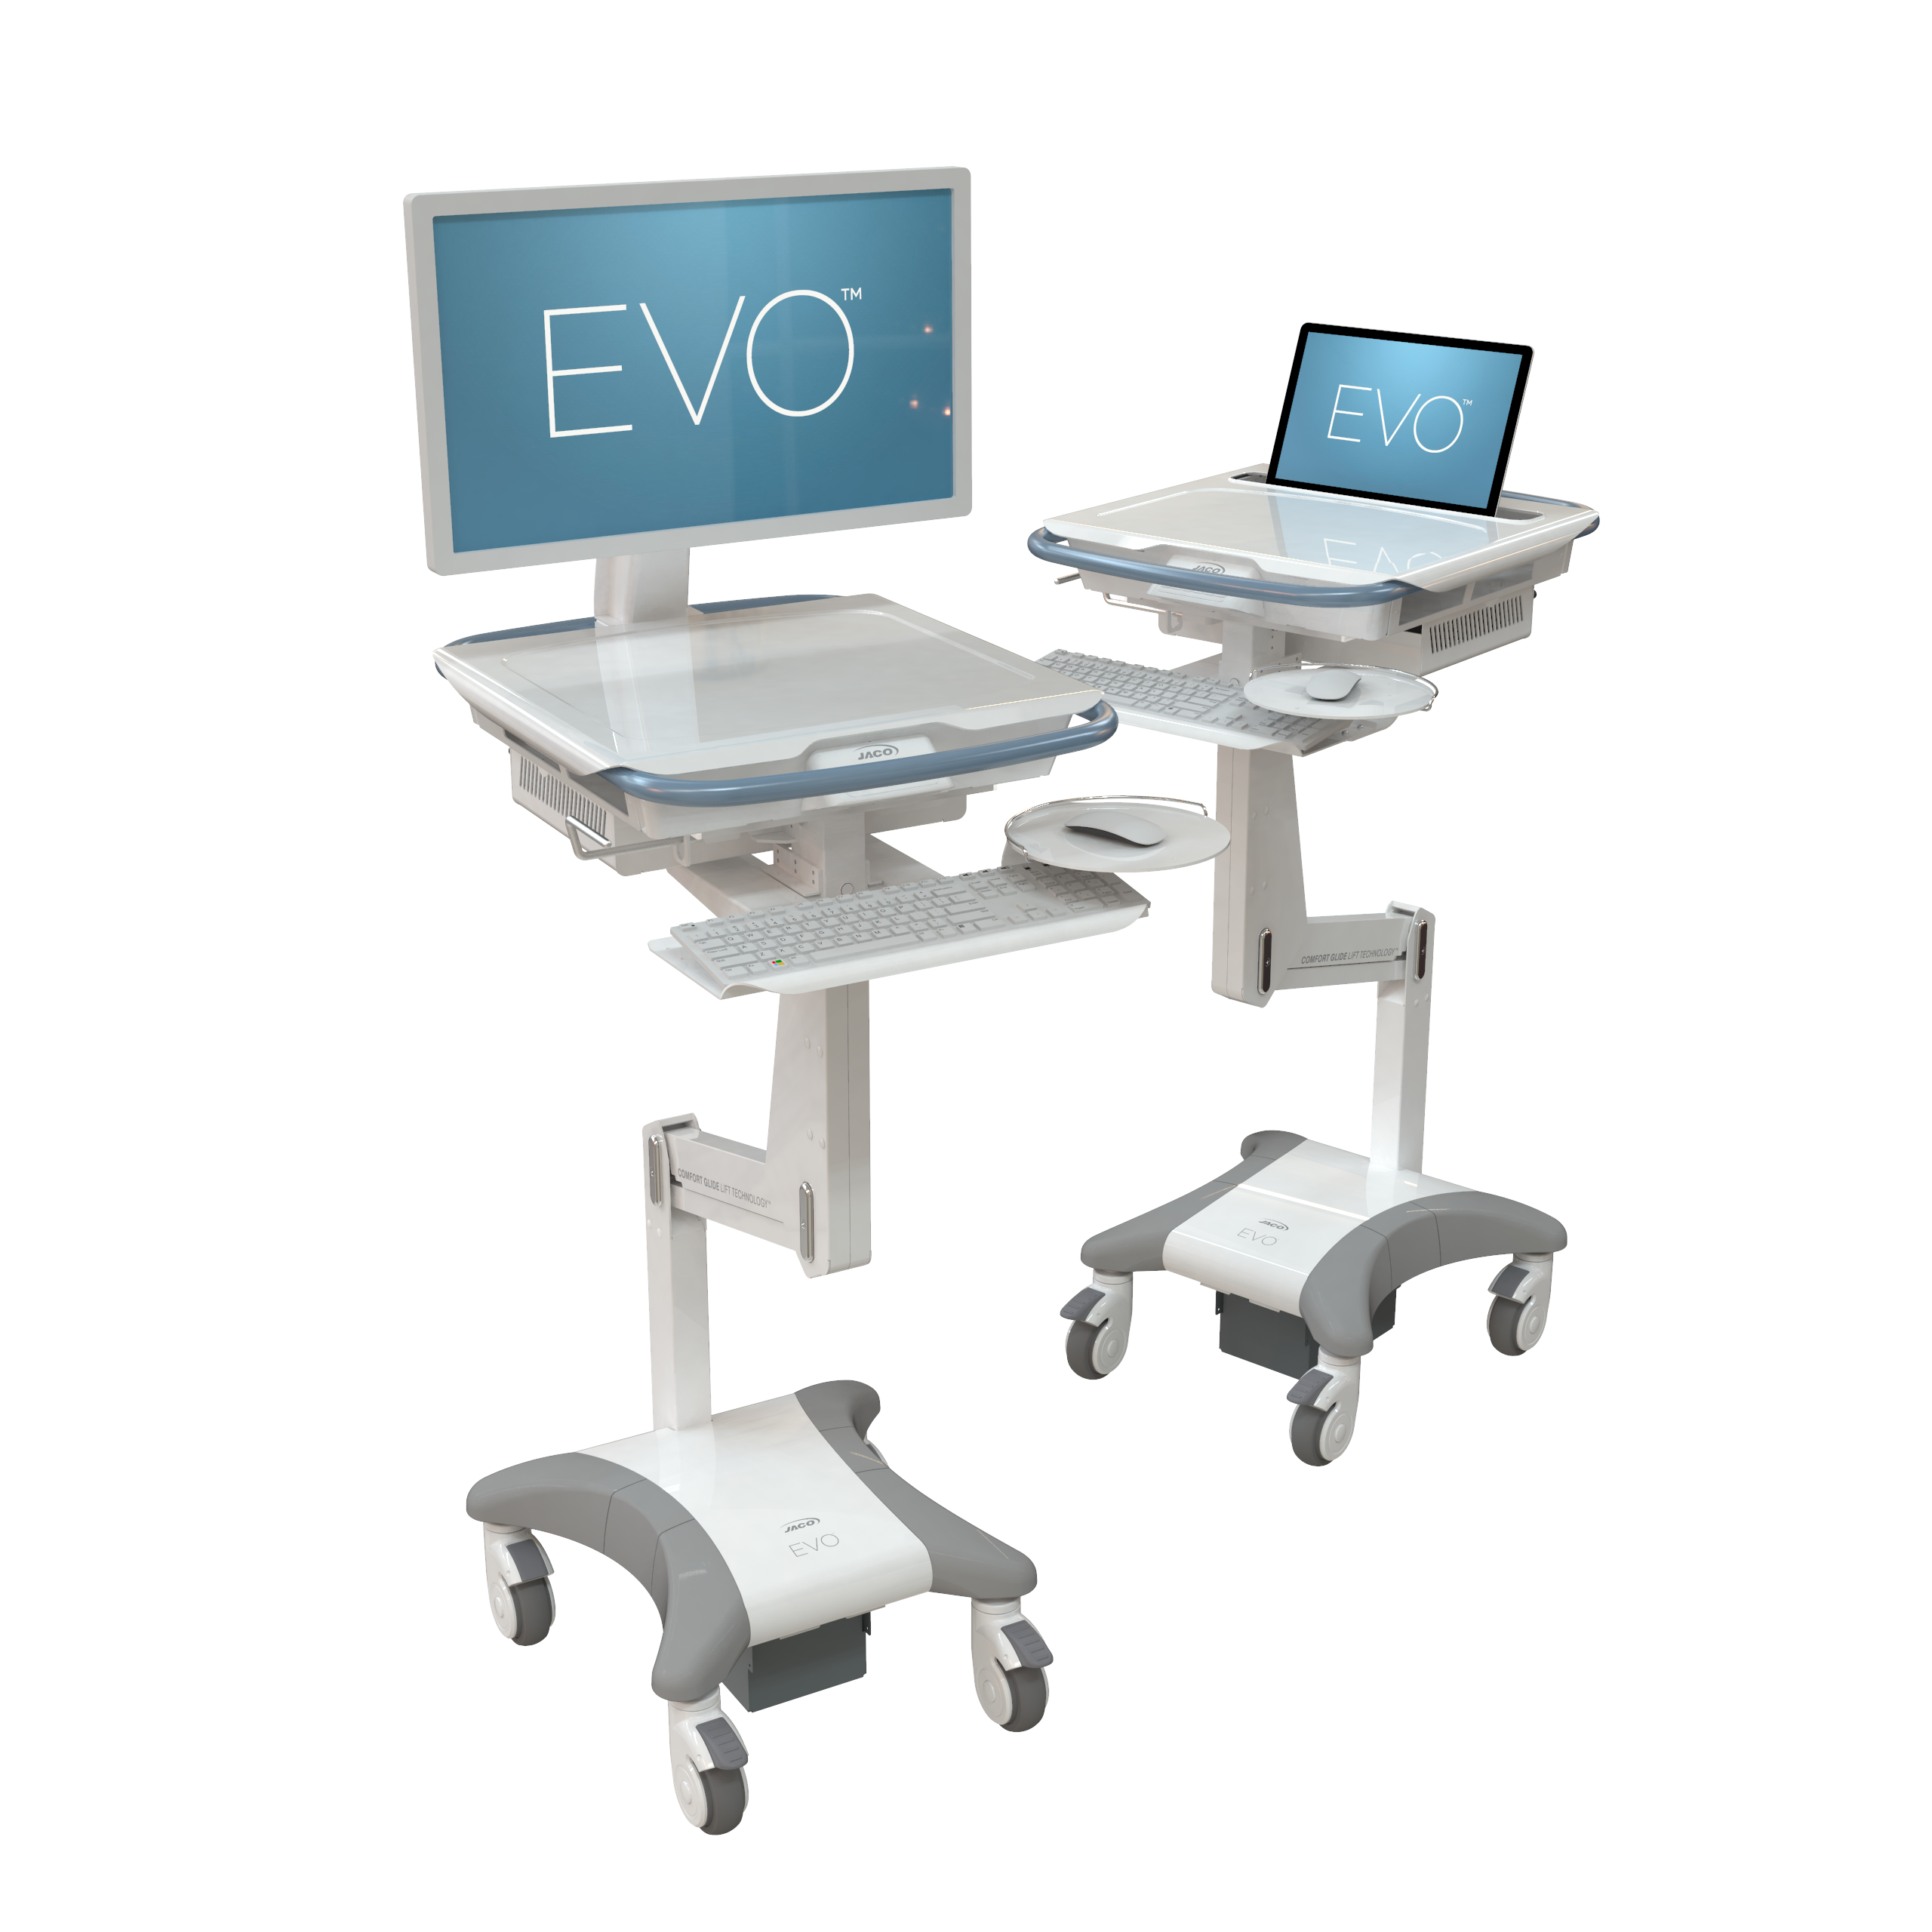 EVOfor Healthcare